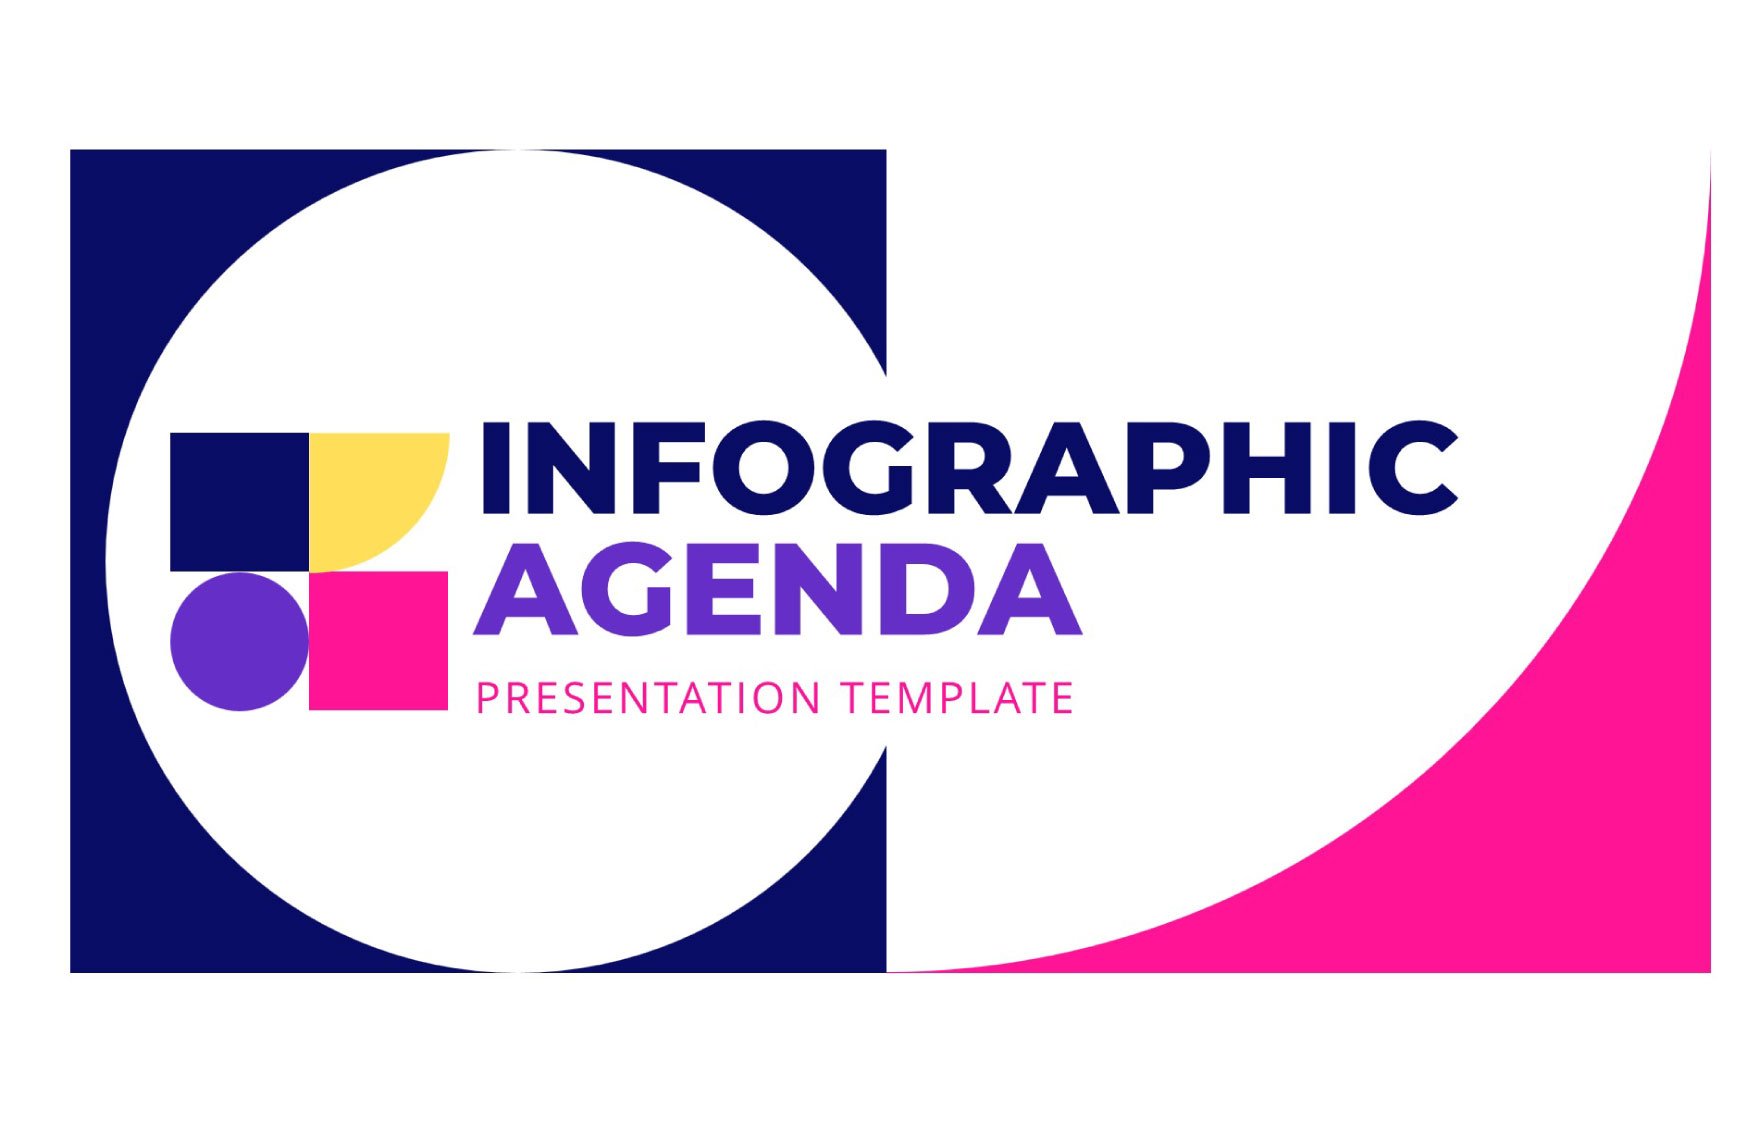 Infographic Agenda Template